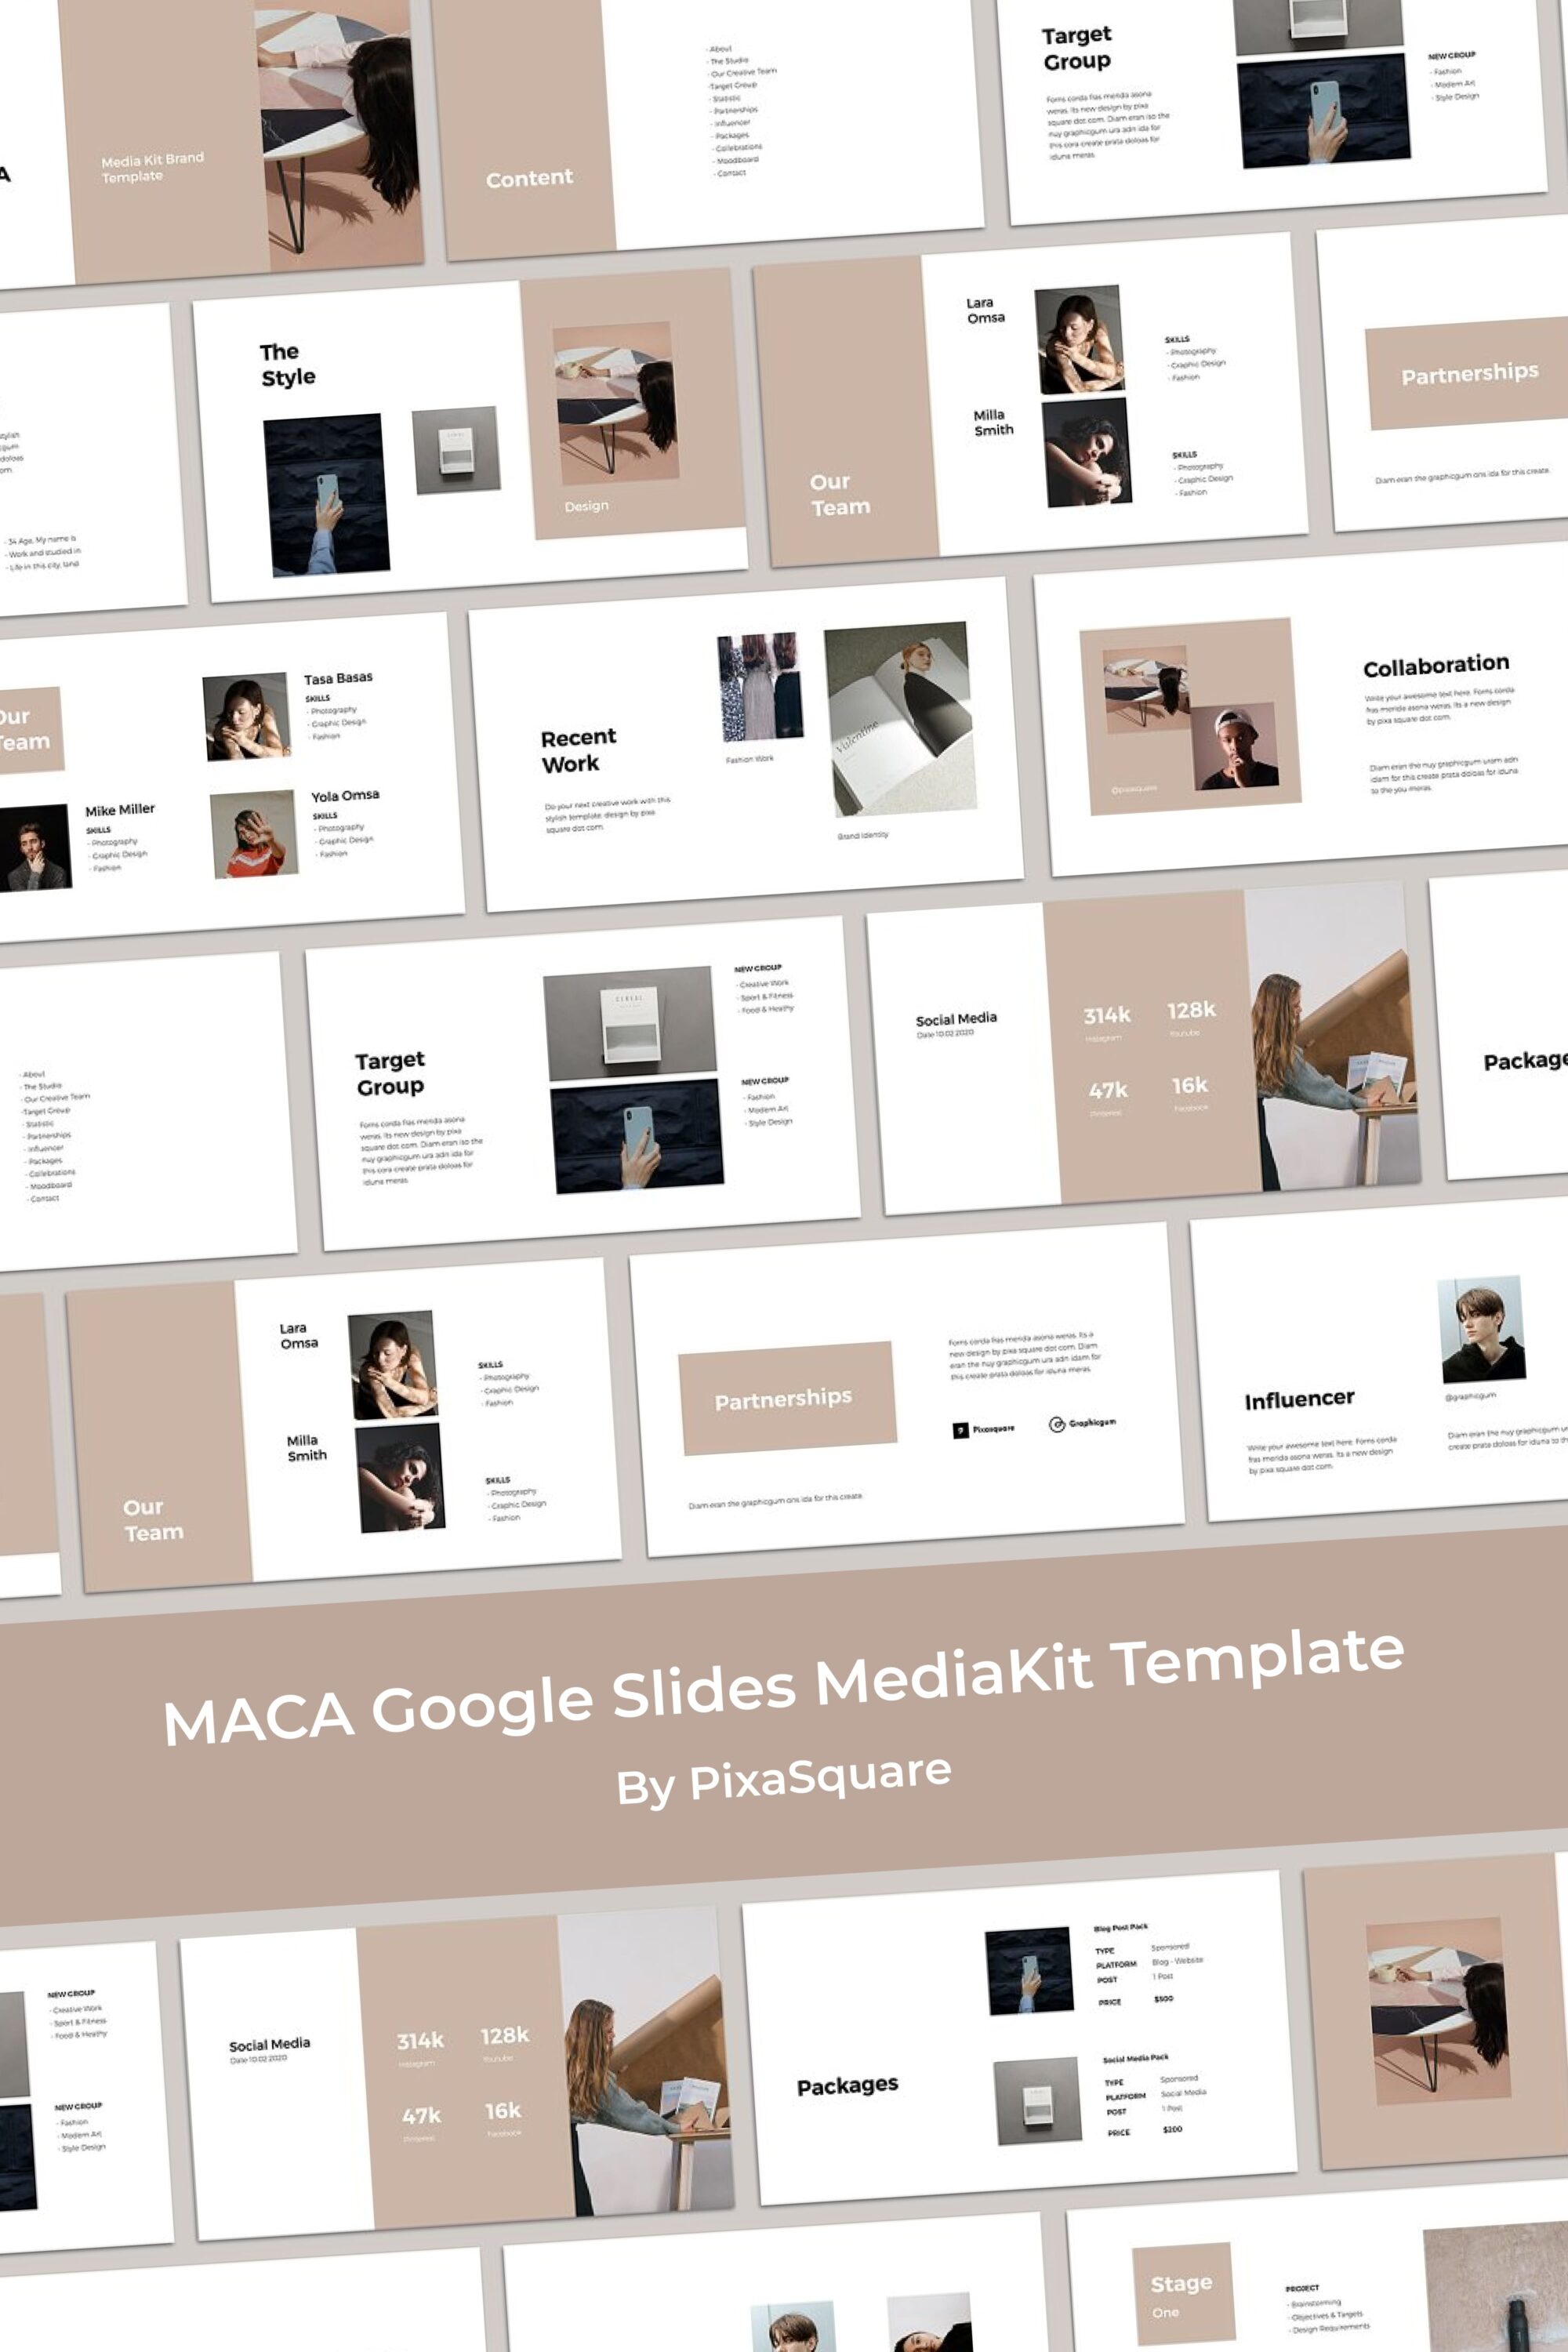 maca google slides mediakit template 03